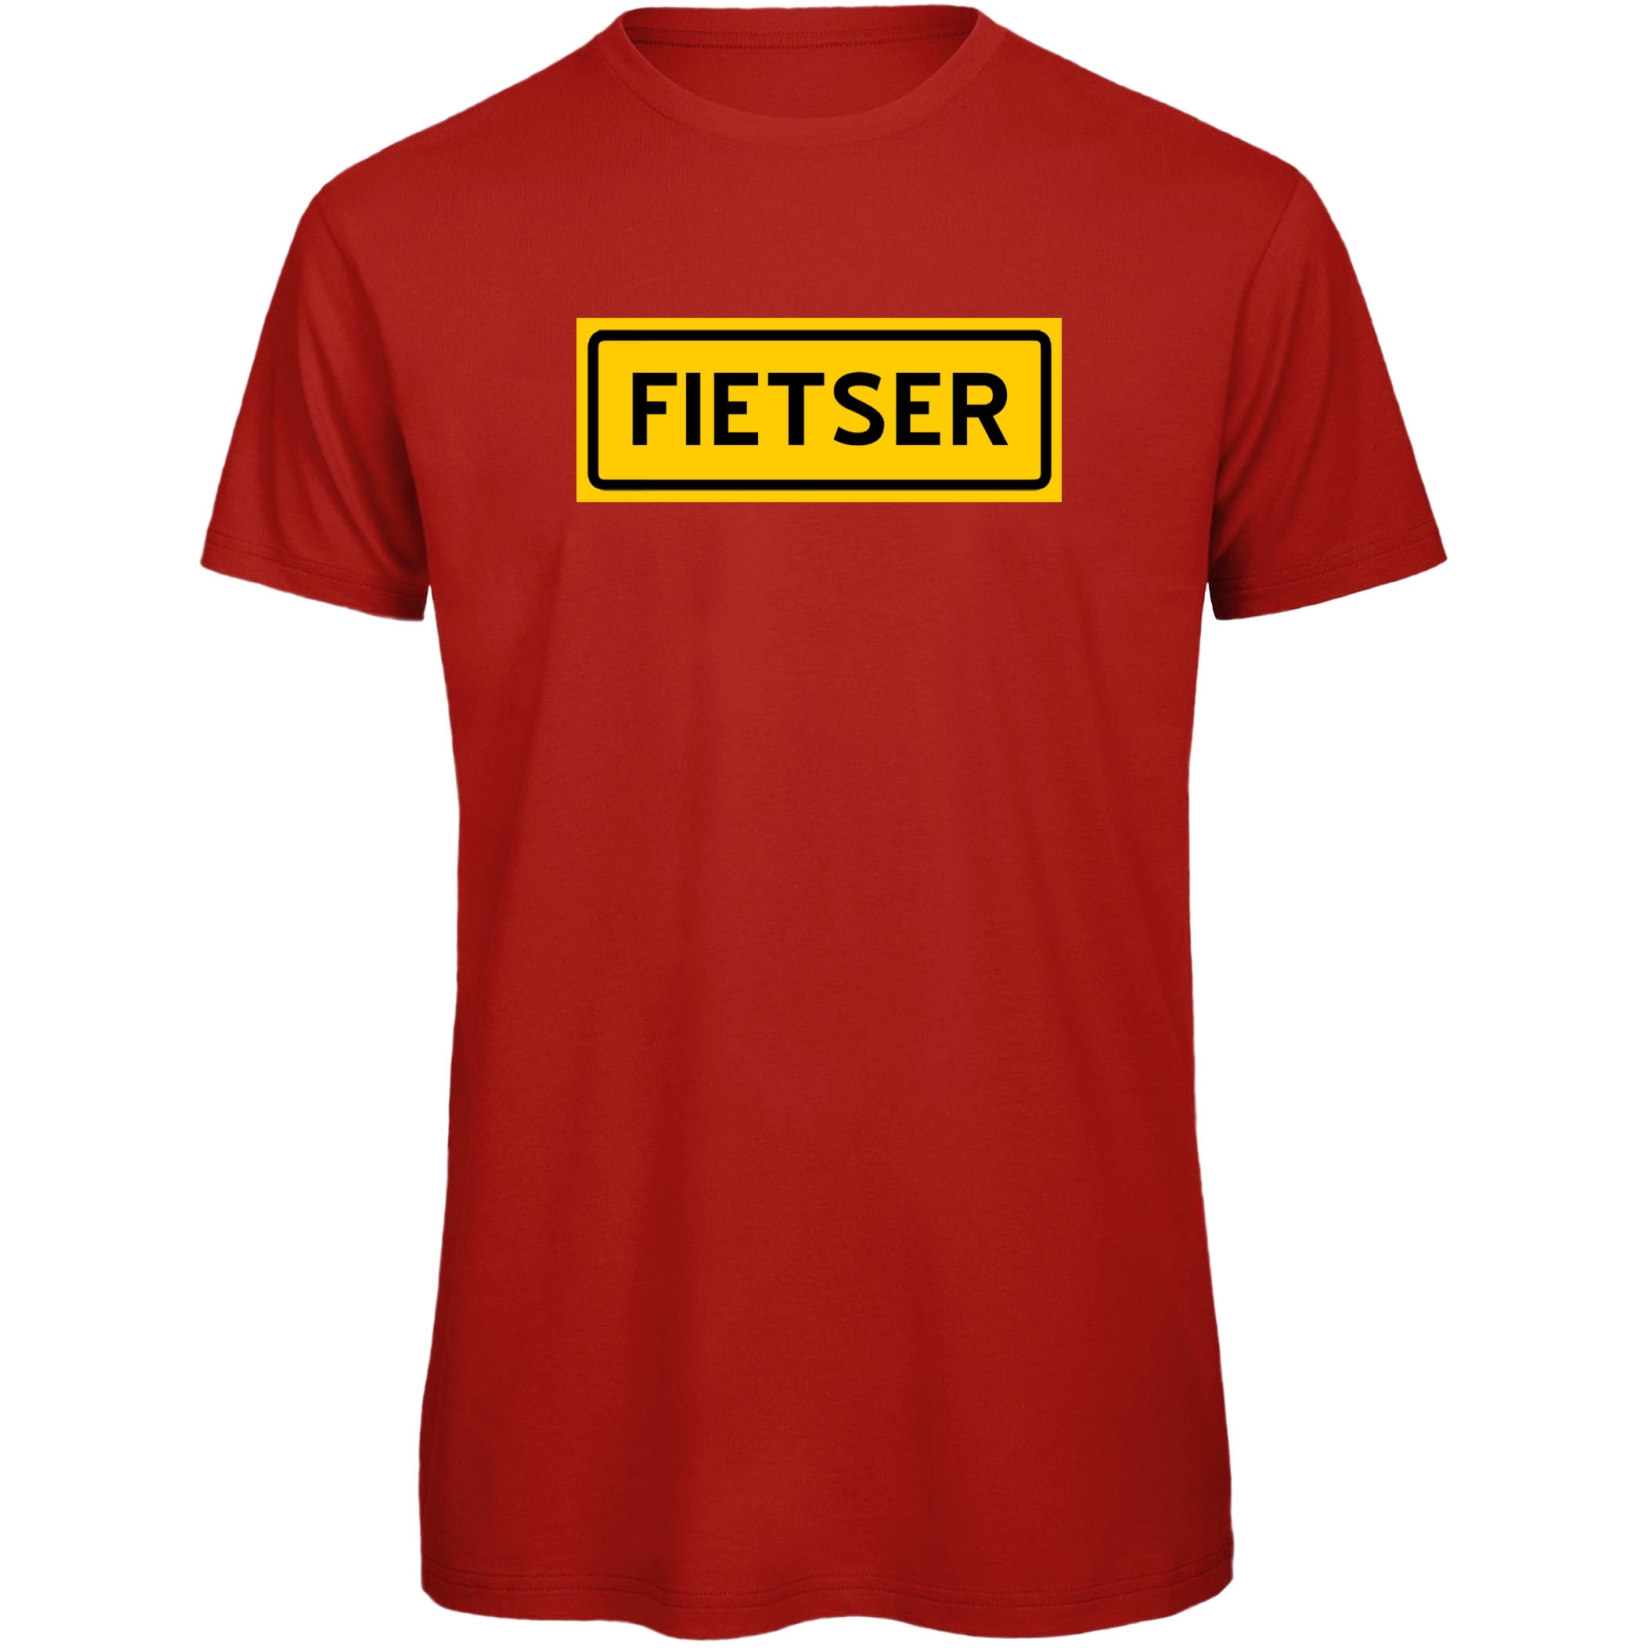 Foto de RTTshirts Camiseta Bicicleta - Fietser - rojo